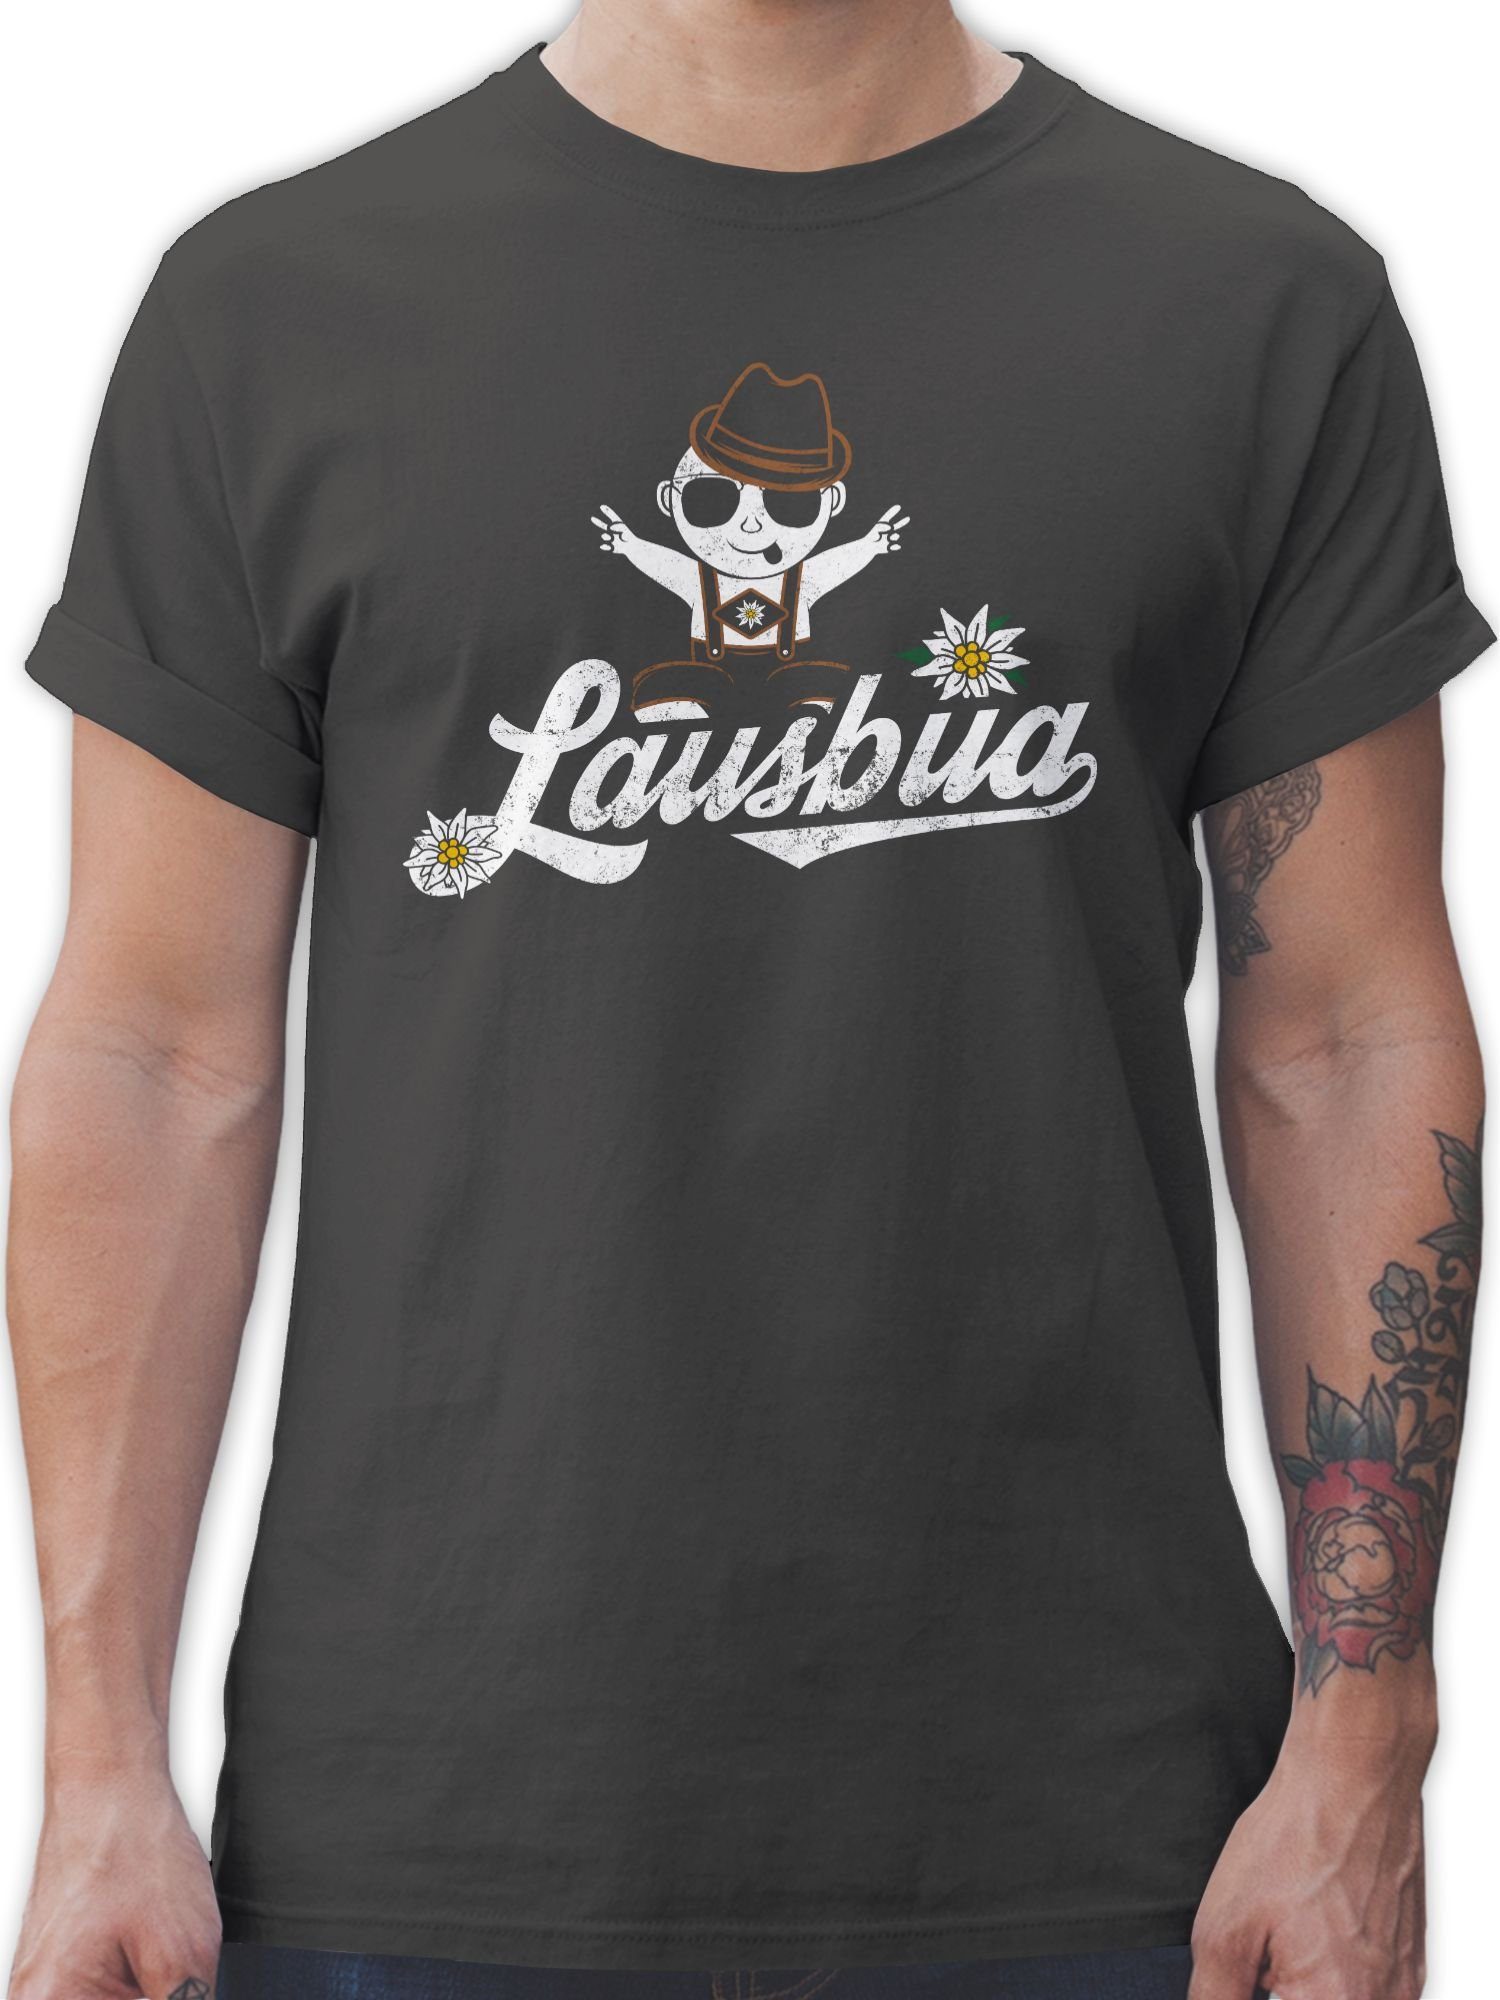 Shirtracer T-Shirt Lausbua Baby I Wiesn Lustig Witzig Mode für Oktoberfest Herren 02 Dunkelgrau